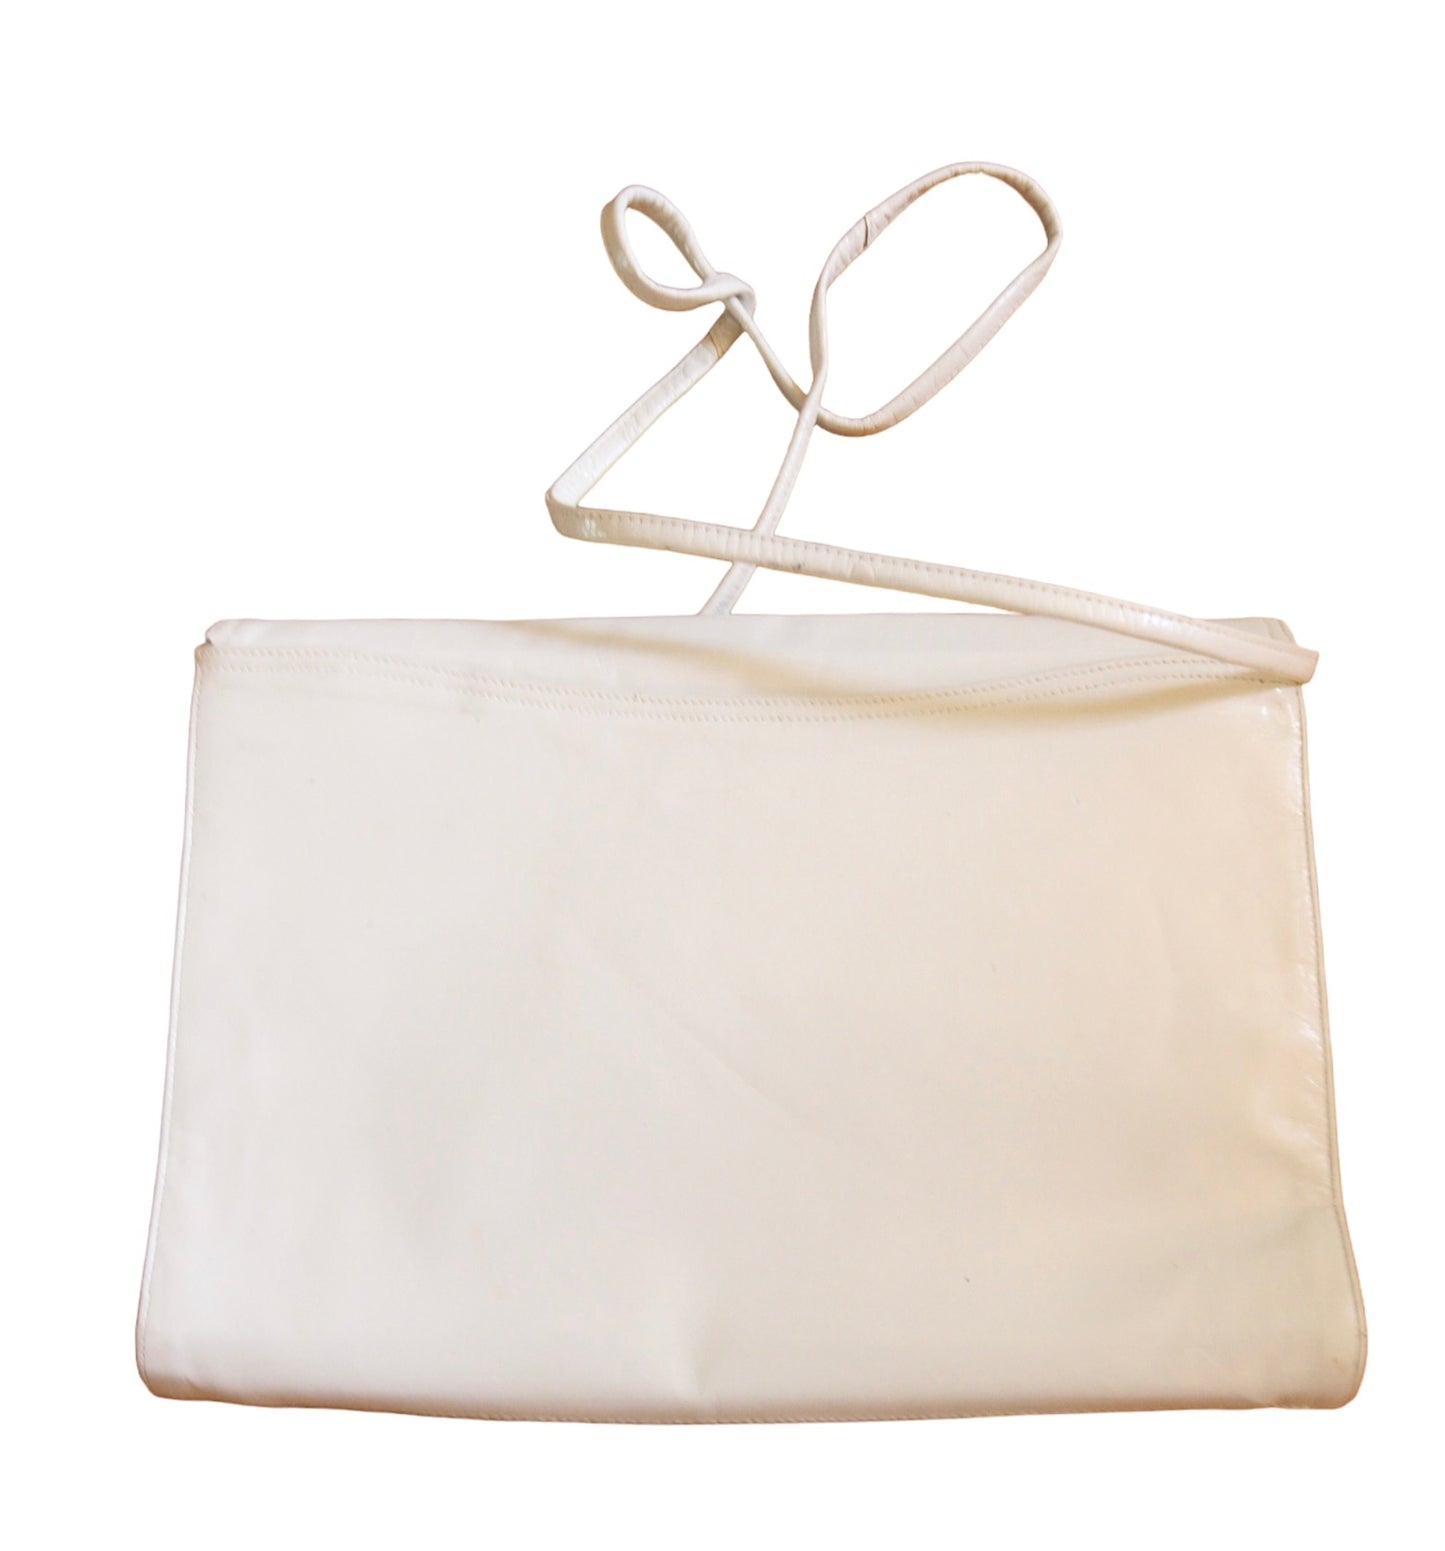 Gifting Vintage Handbag White and Navy Leather Envelope Purse